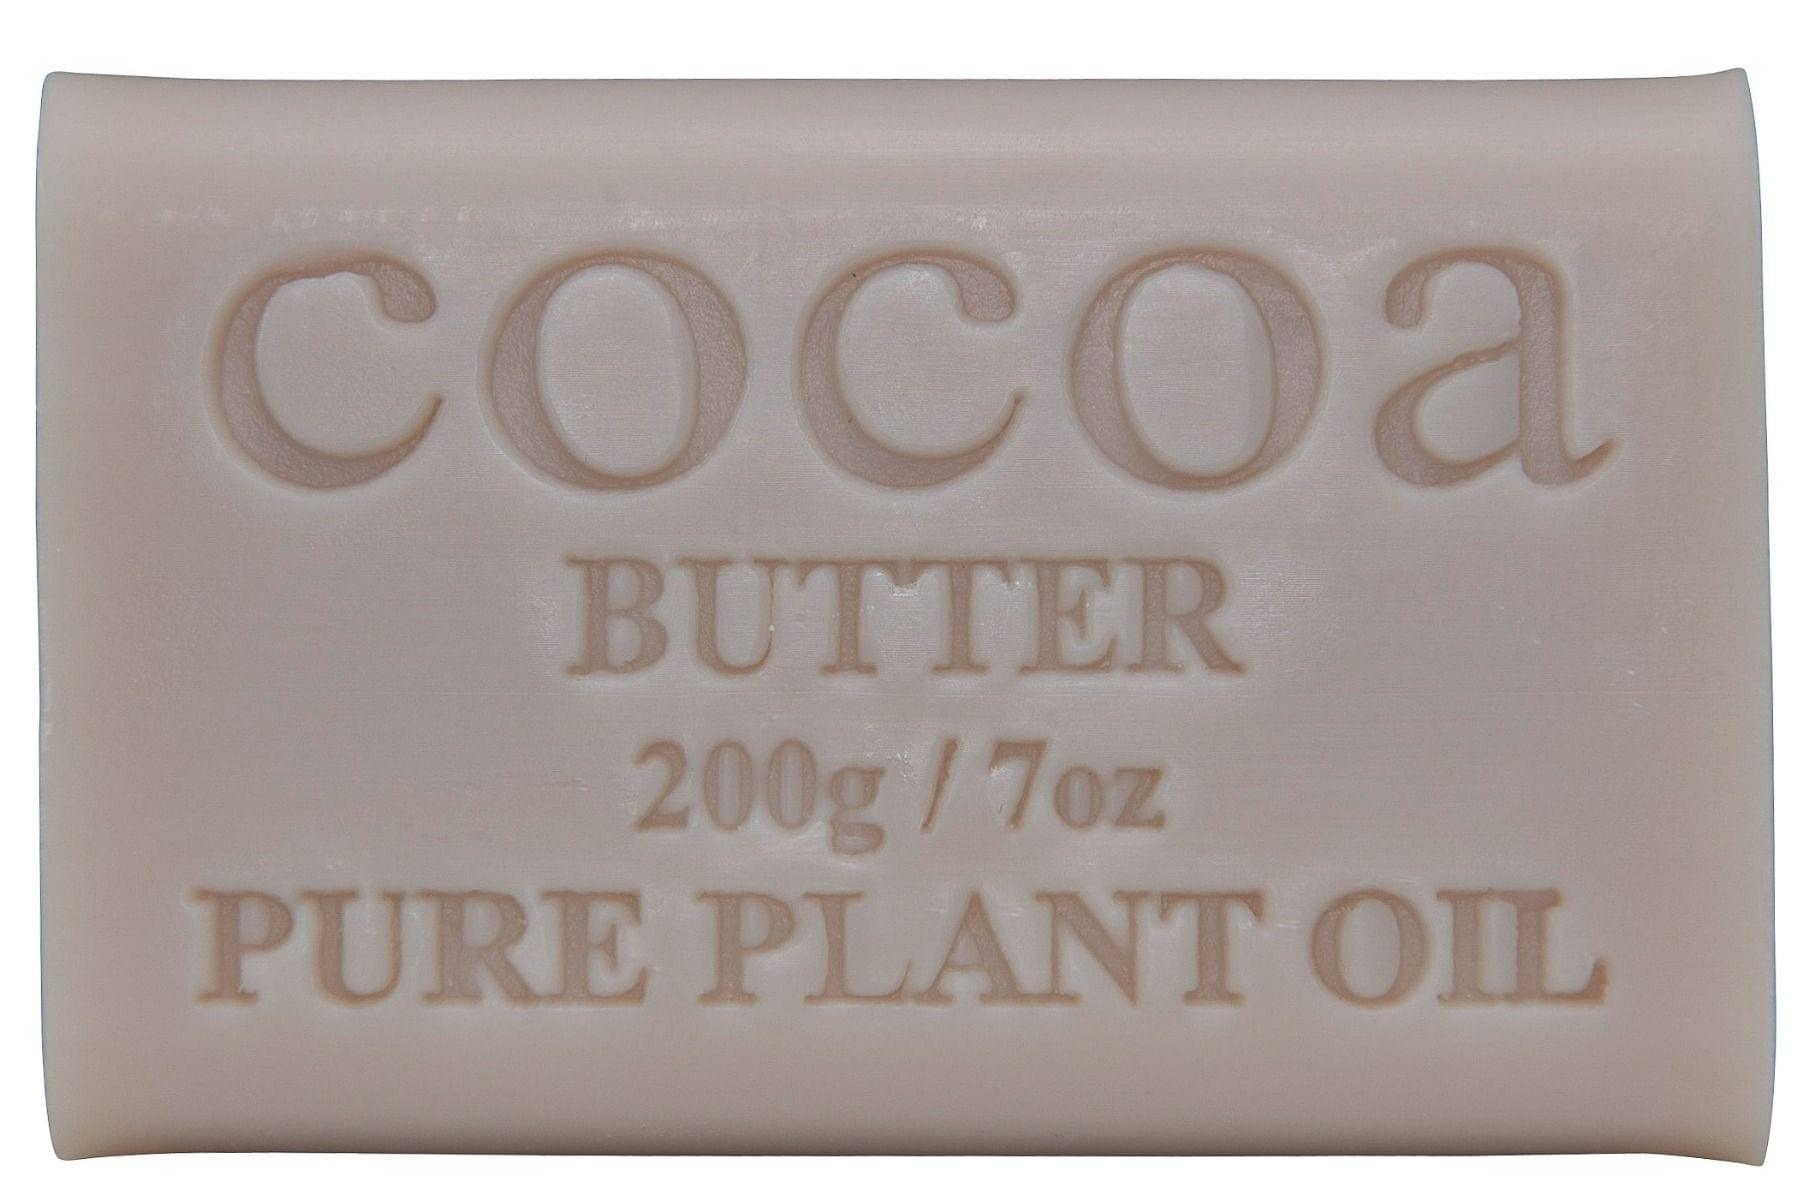 Cocoa butter soap